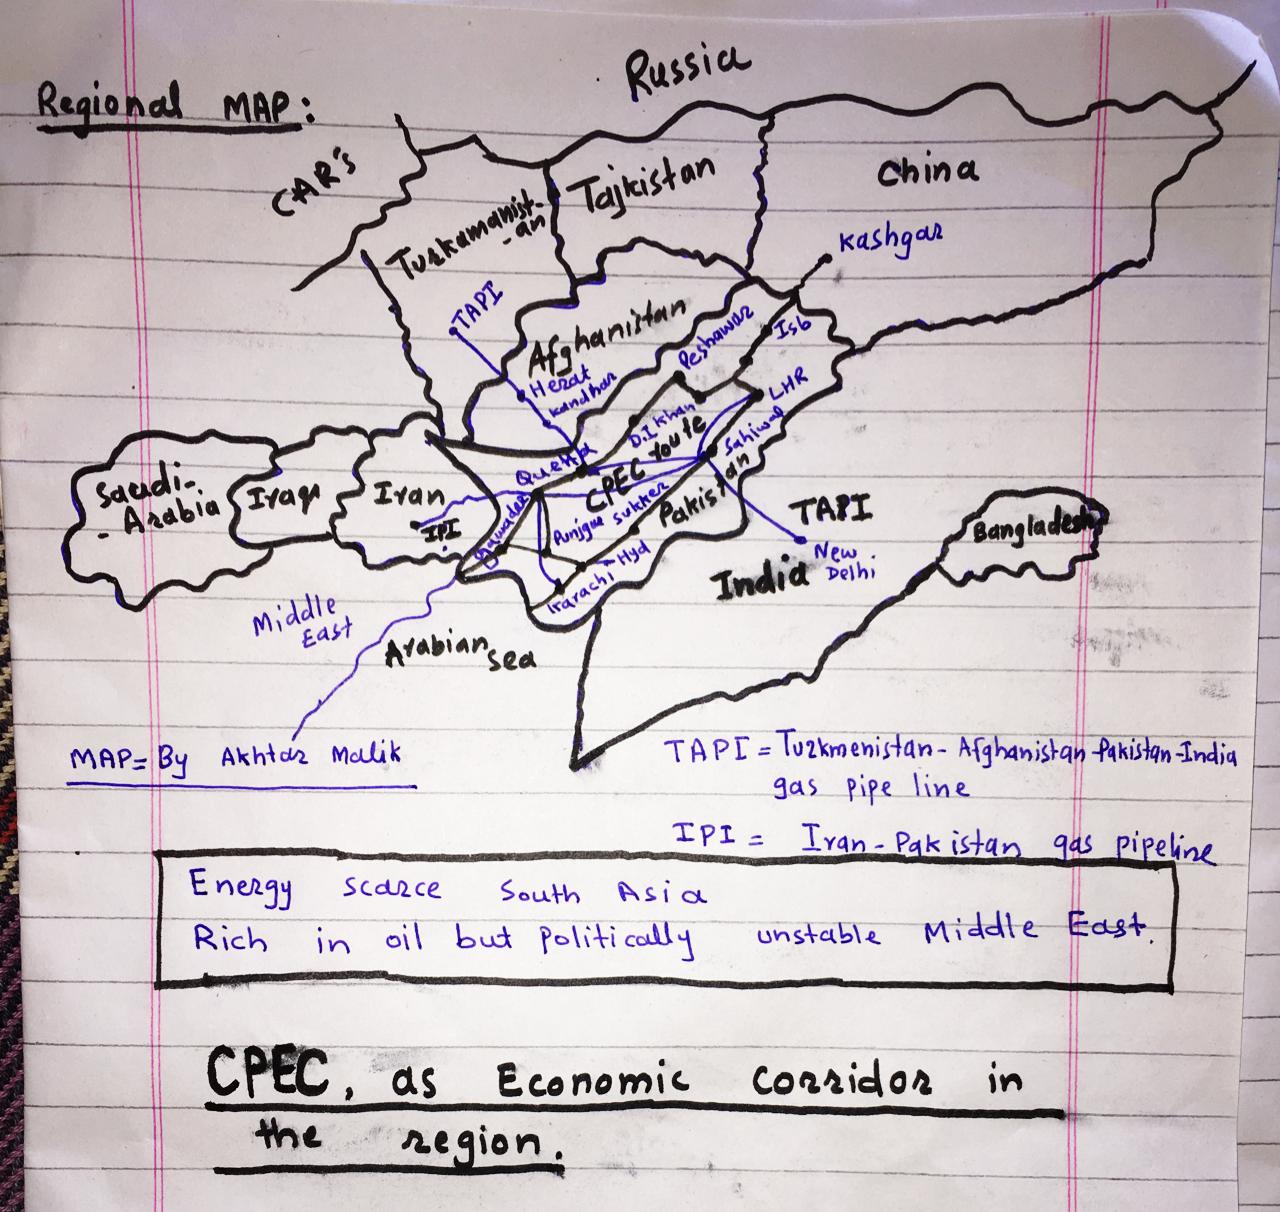 CPEC – As An Economic Corridor In The Region